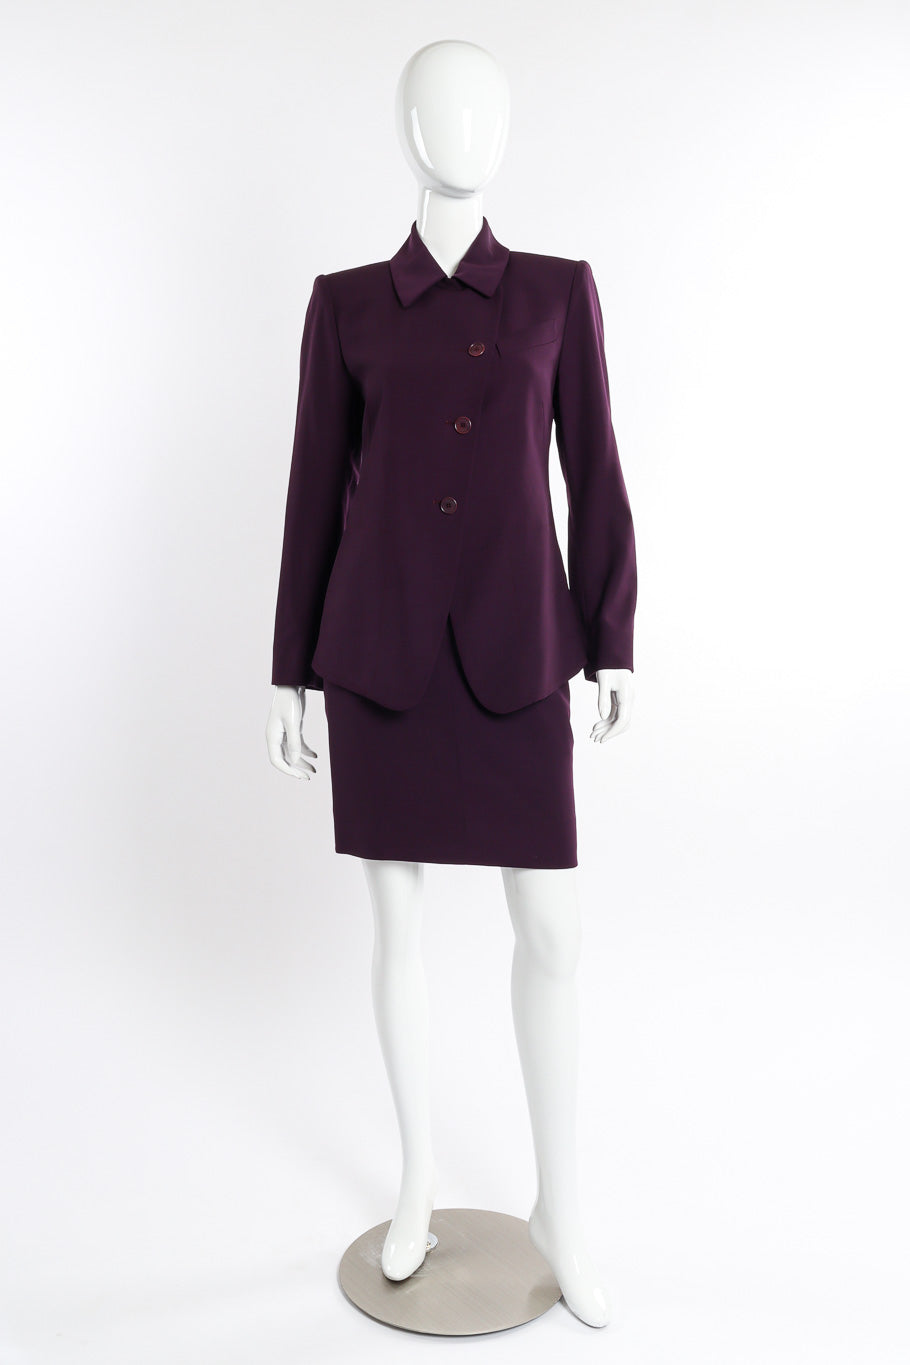 Vintage Hermés Asymmetrical Blazer and Skirt Set front view on mannequin@recessla